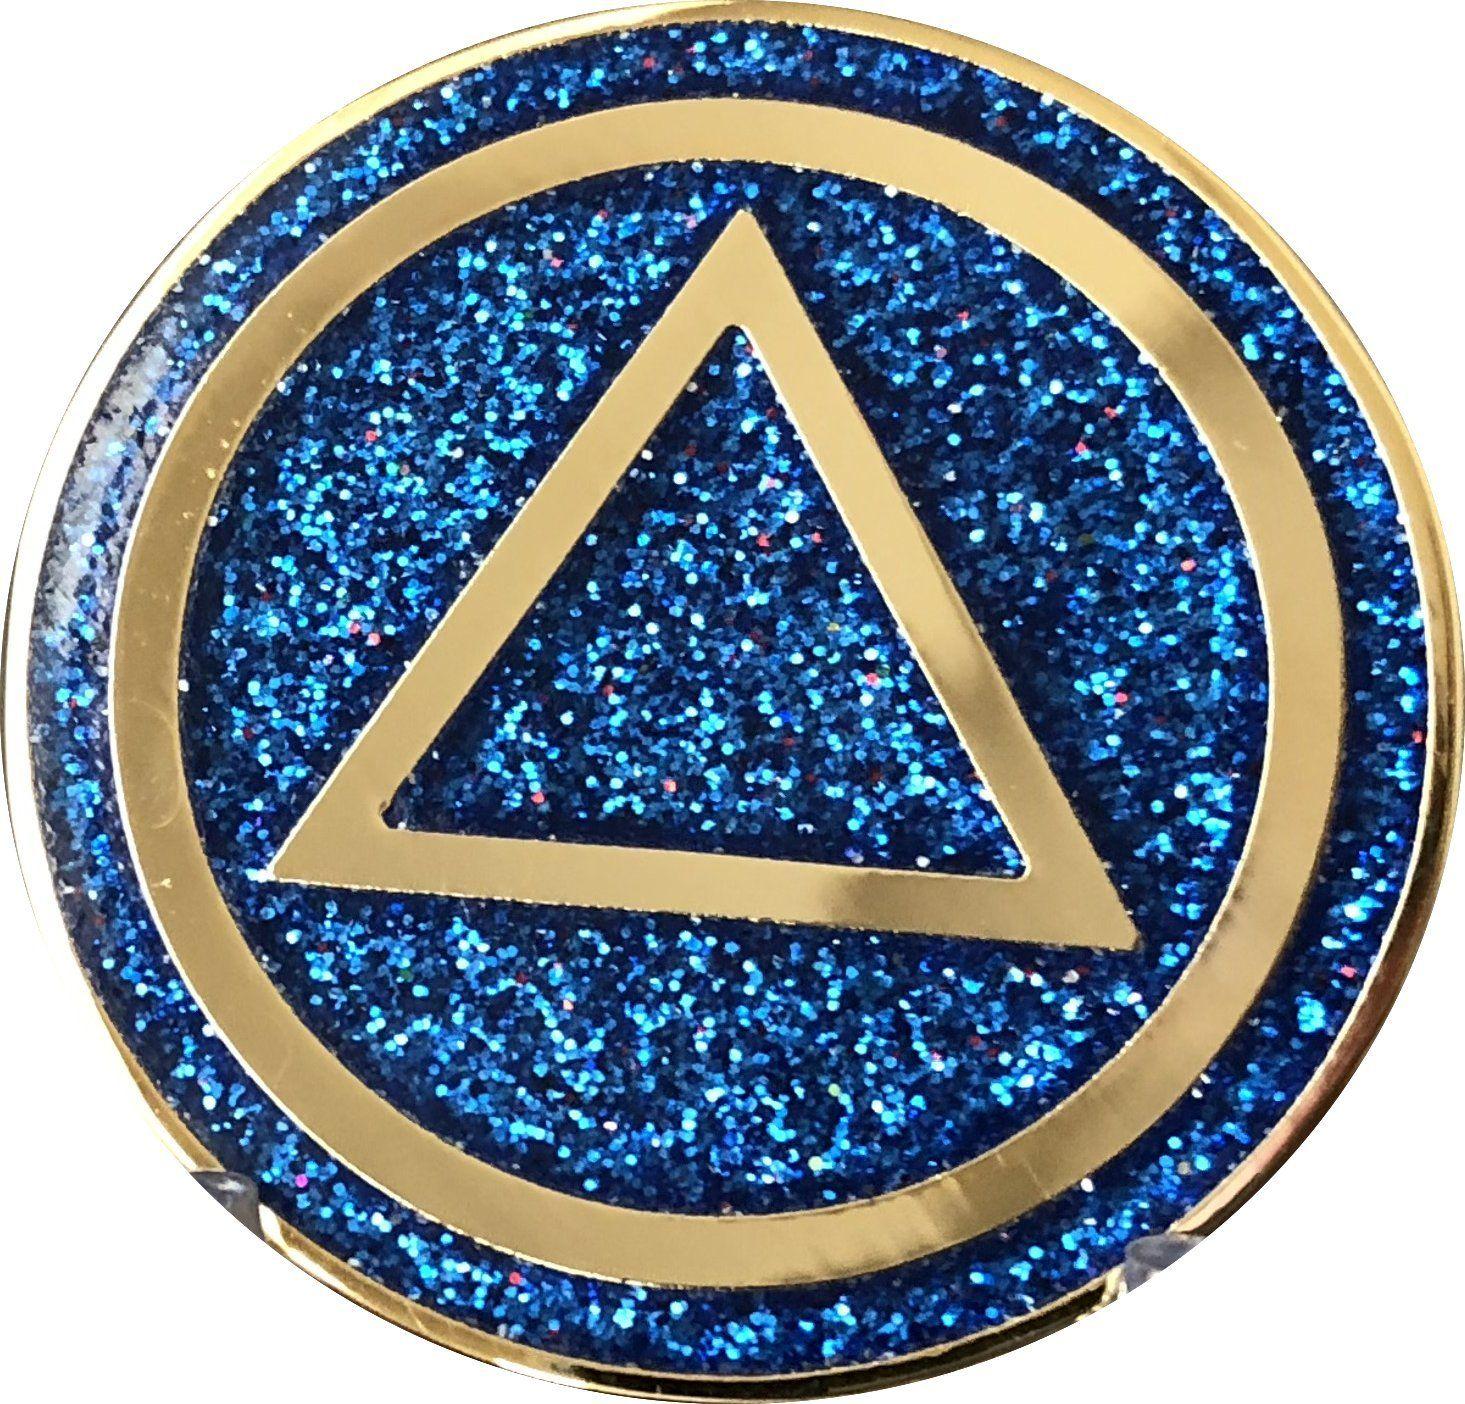 Blue Circle with Triangle Logo - Amazon.com : AA Circle Triangle Logo Reflex Blue Glitter Gold Plated ...